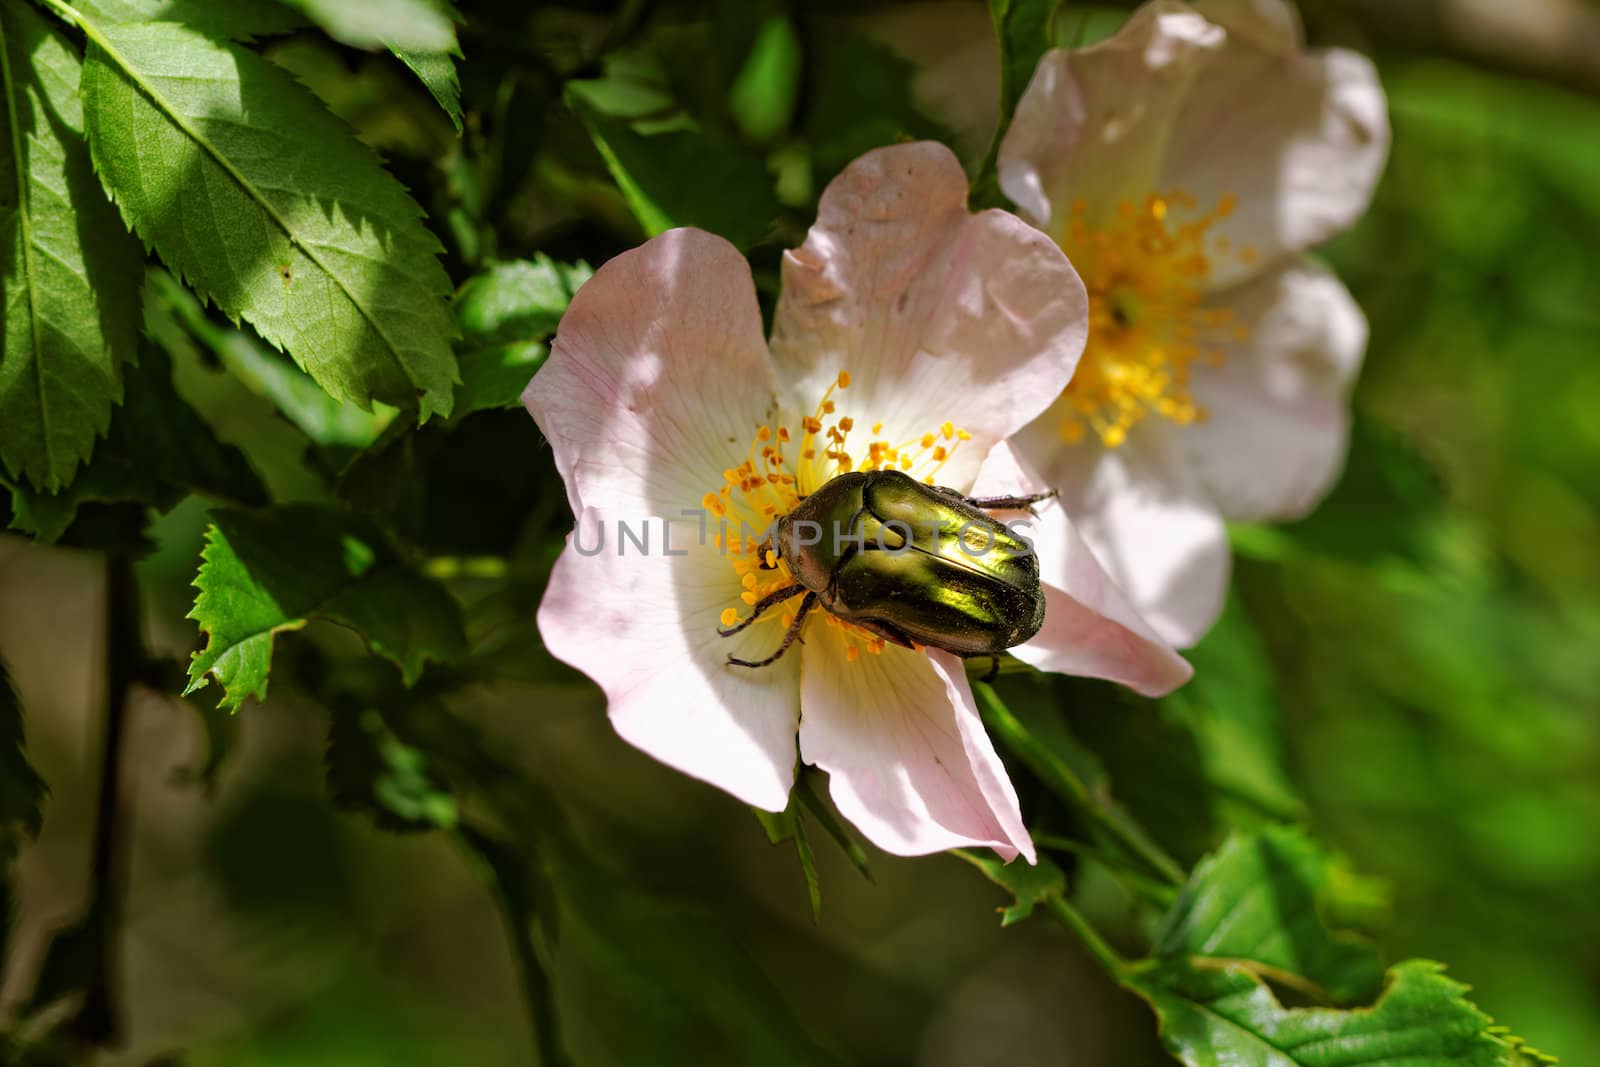 Protaetia fieberi specie of Beetle by NagyDodo